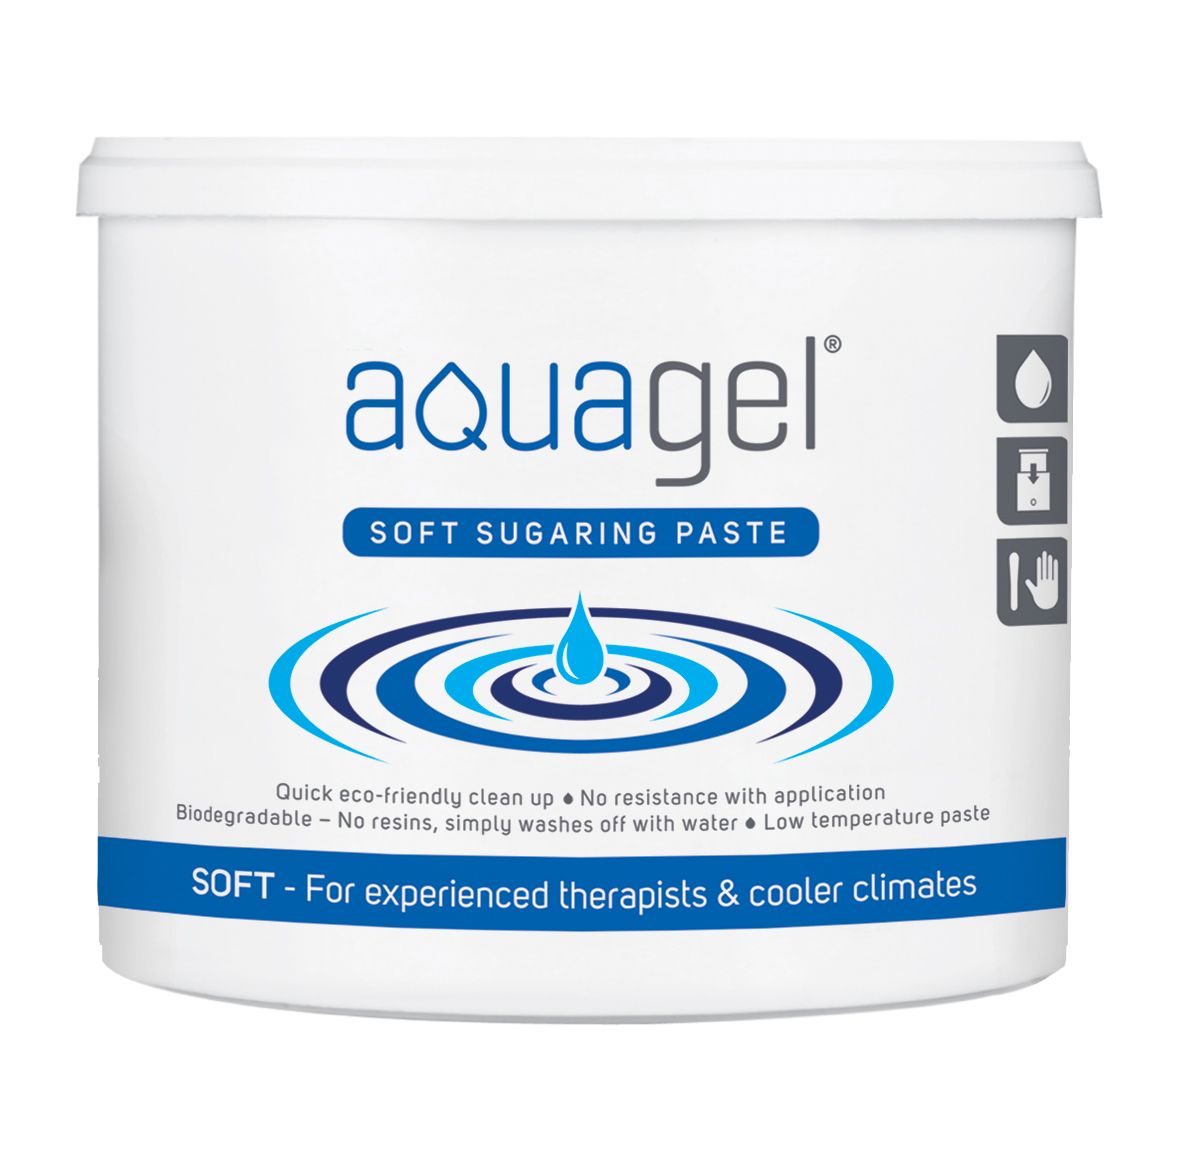 Caronlab Aquagel Sugaring Paste - Soft 600gm